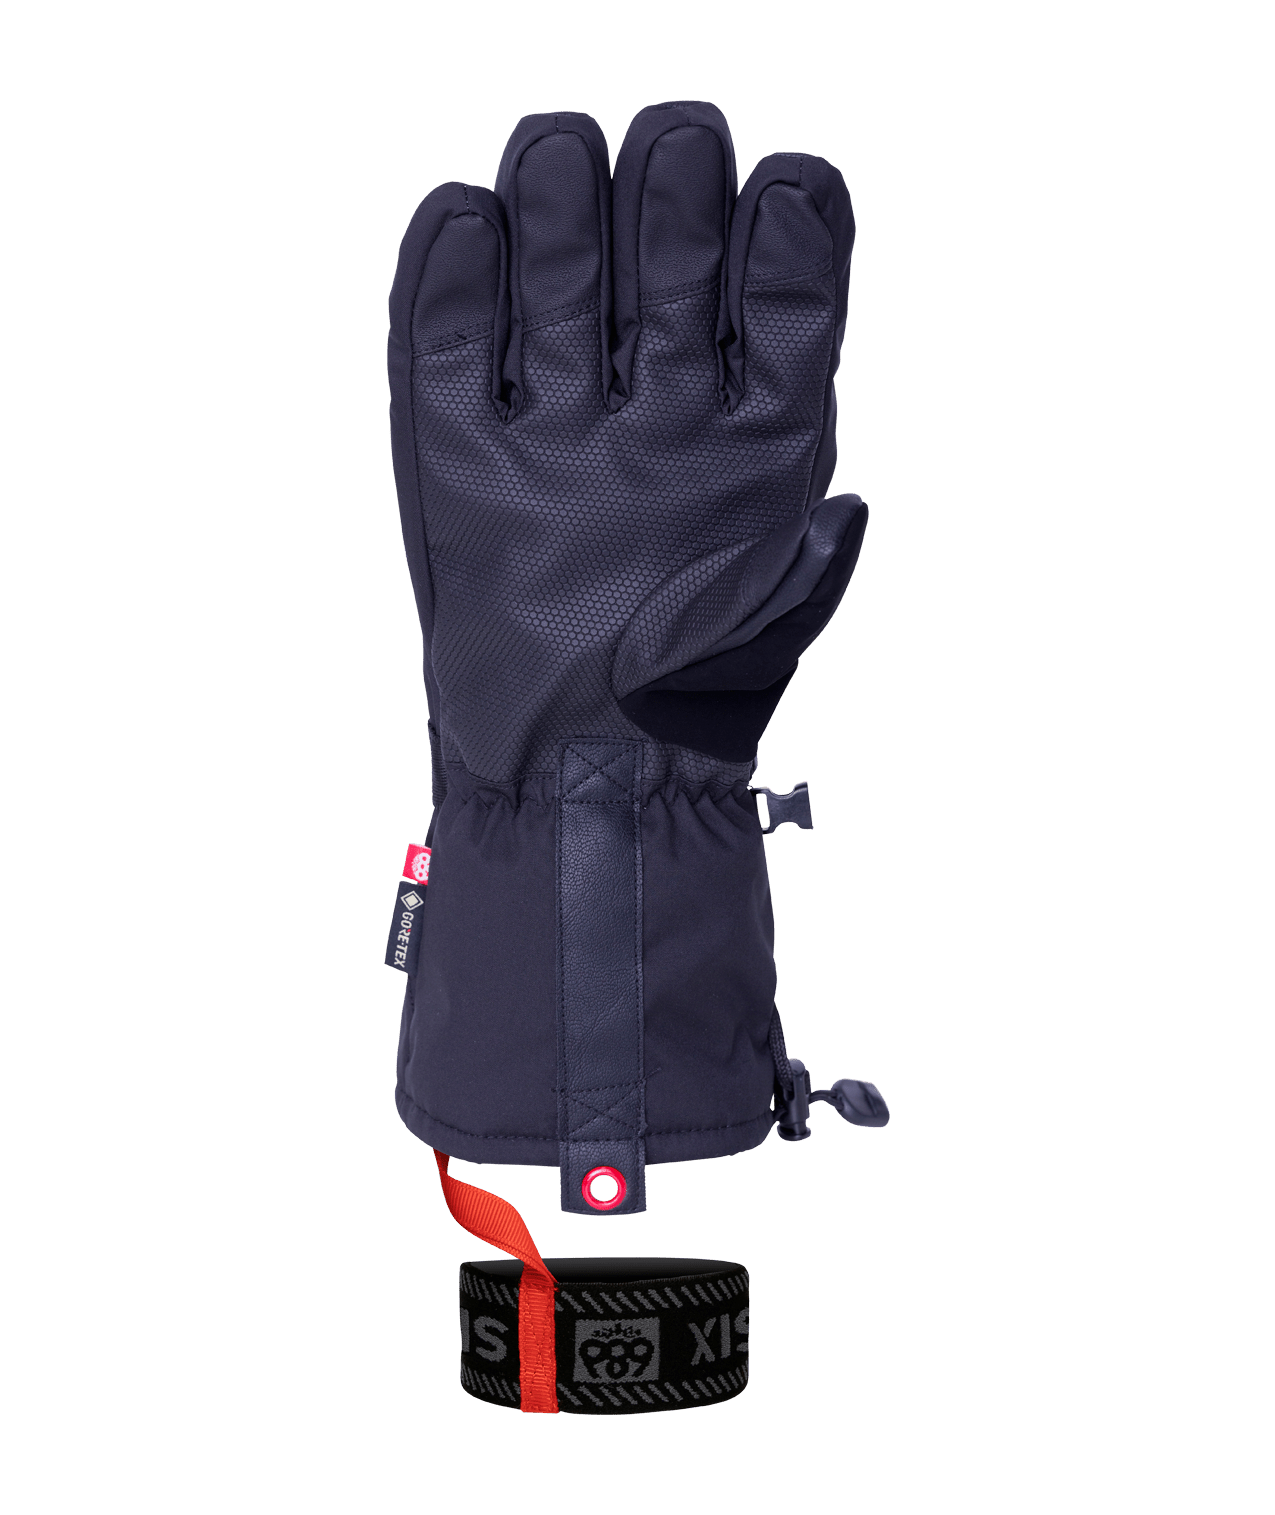 686 GORE-TEX Smarty 3-In-1 Gauntlet Glove Black Men's Snow Gloves 686 